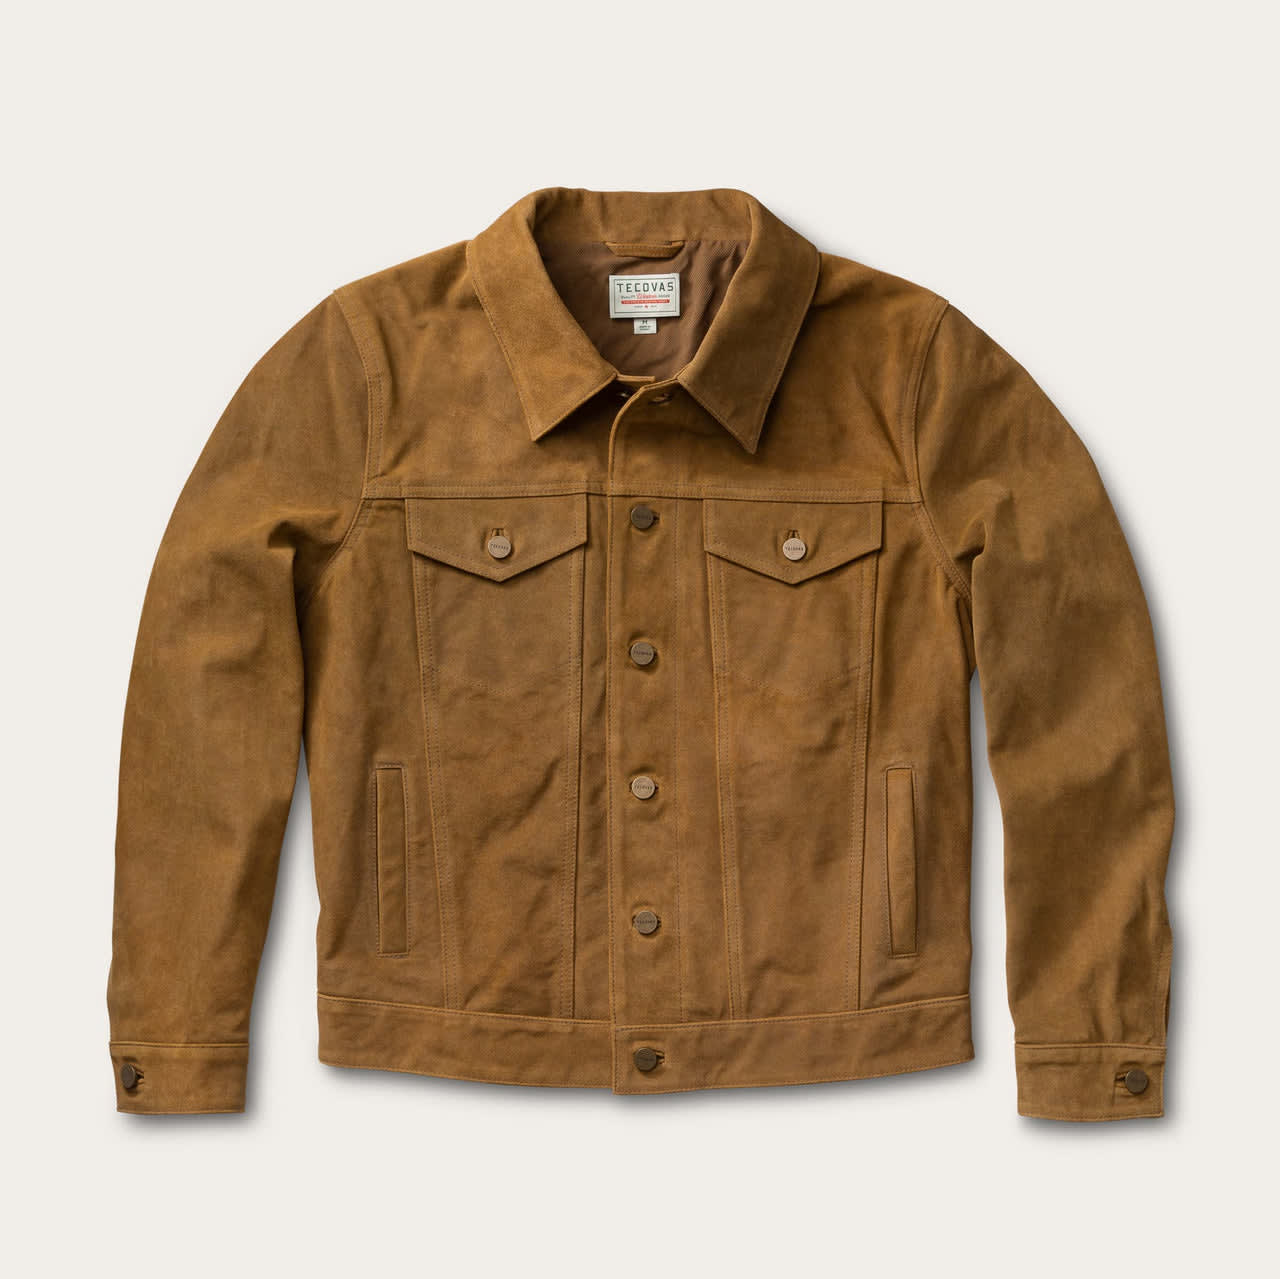 Men's TRUCKER Suede Leather Jacket Western Classic Denim Style Shirt Jacket 1280